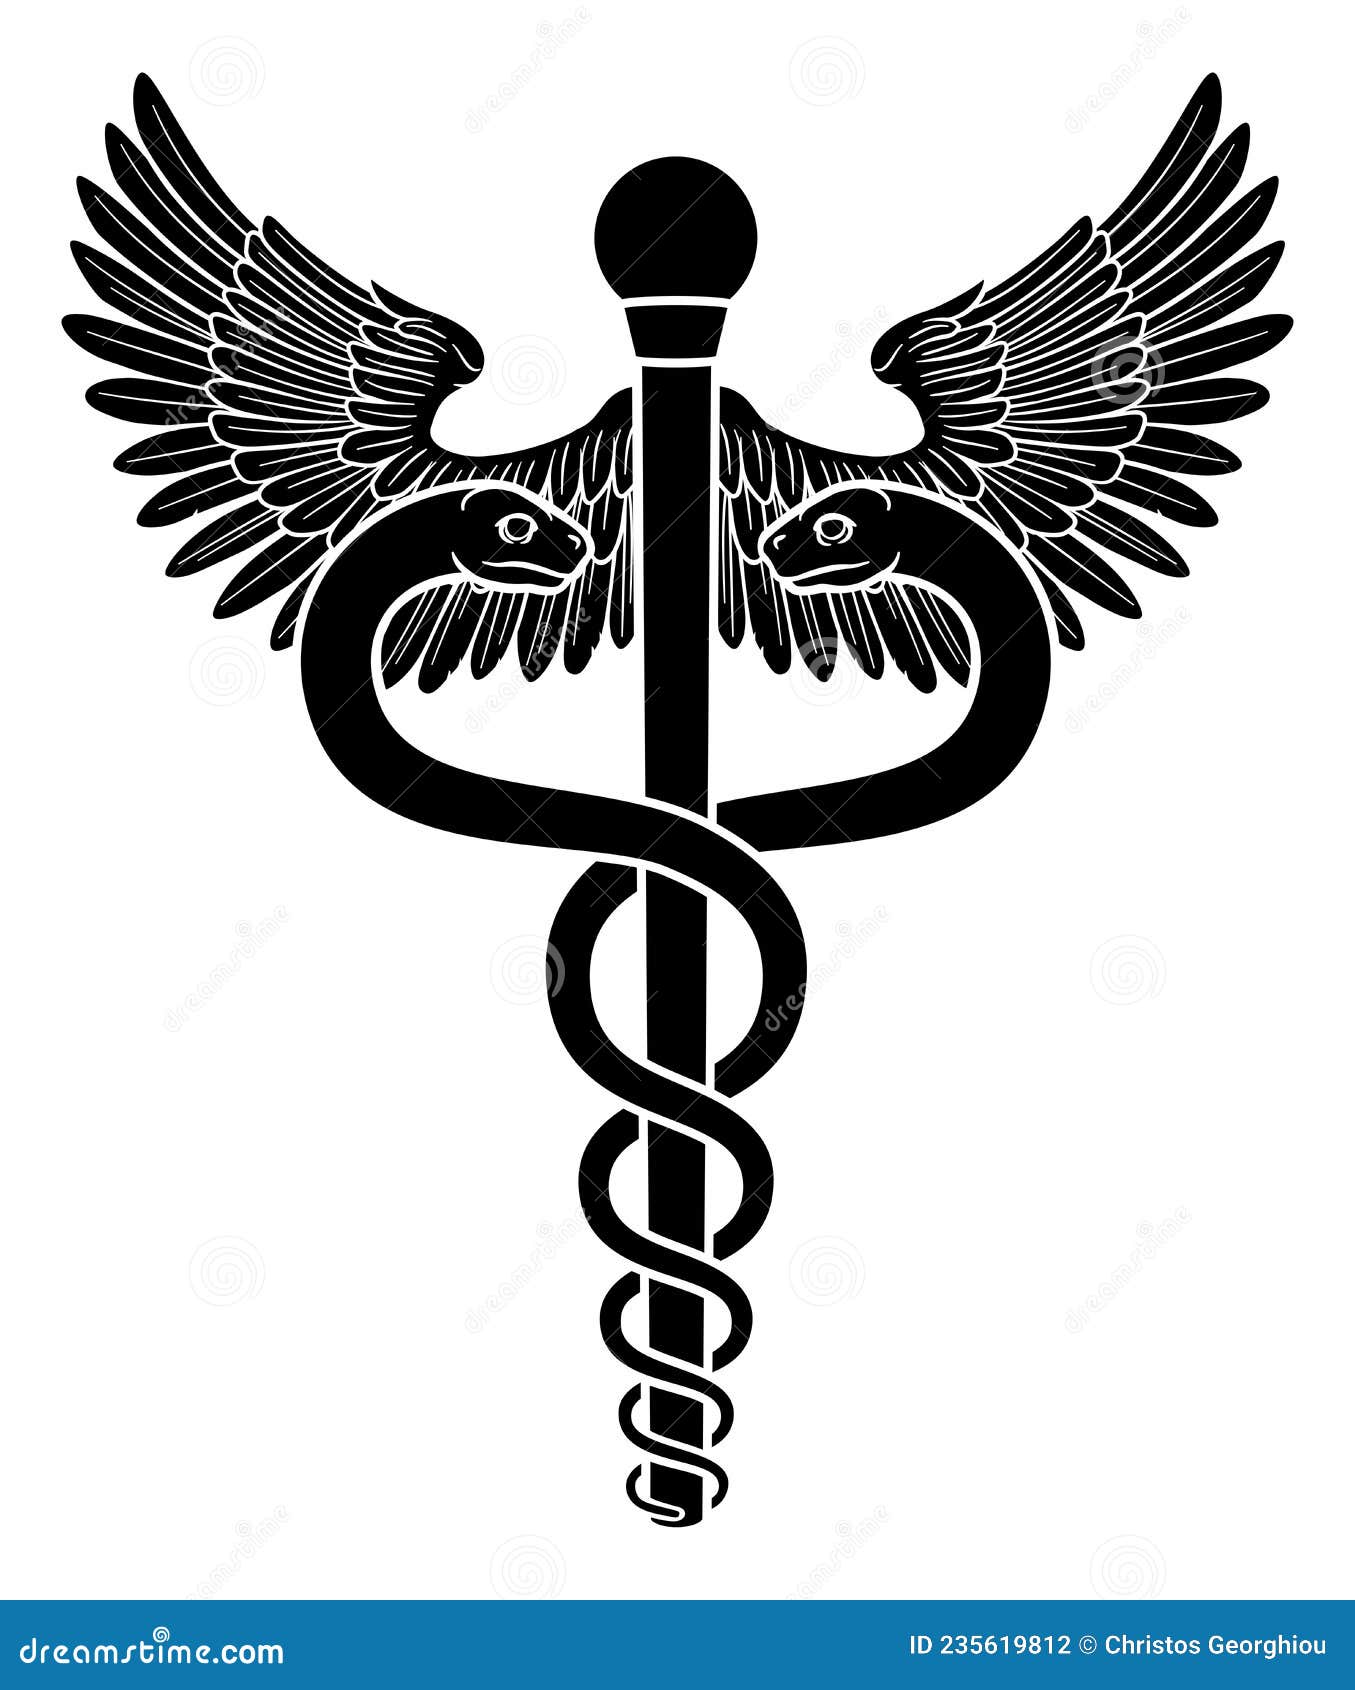 Continuous Line Art Caduceus Medical Sign Concept Stock Vector -  Illustration of emblem, caduceus: 219534478